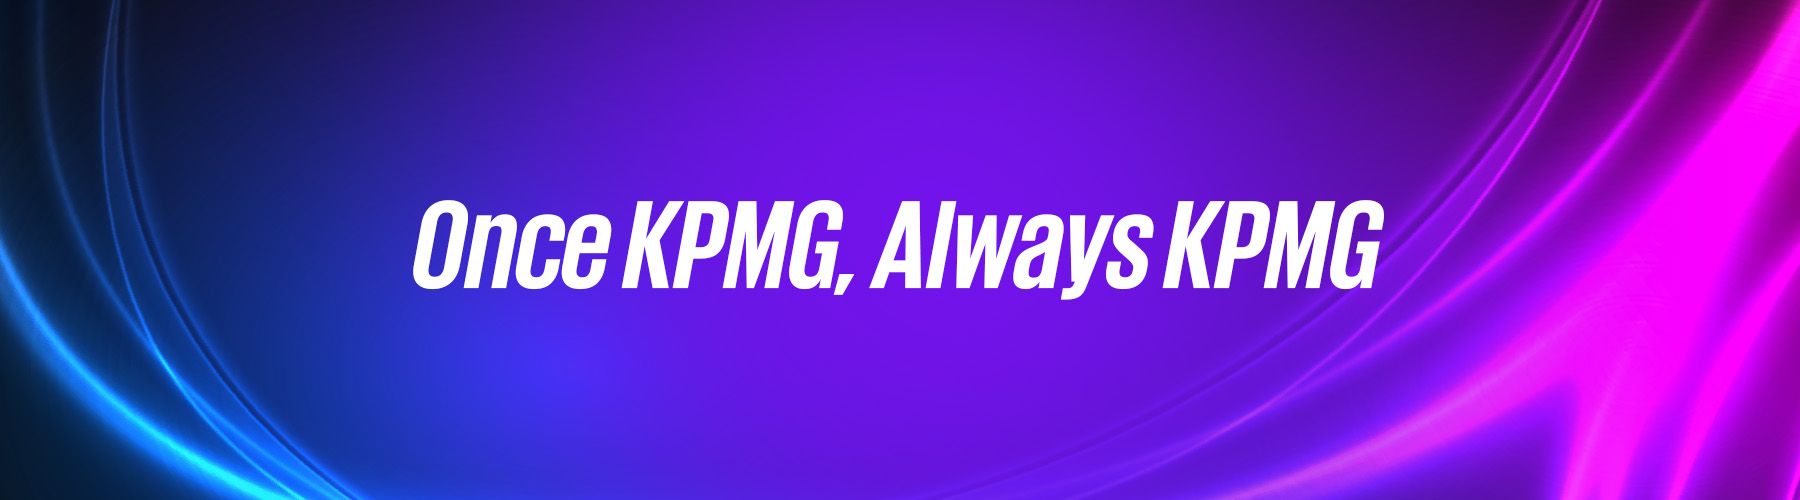 Once KPMG, Always KPMG